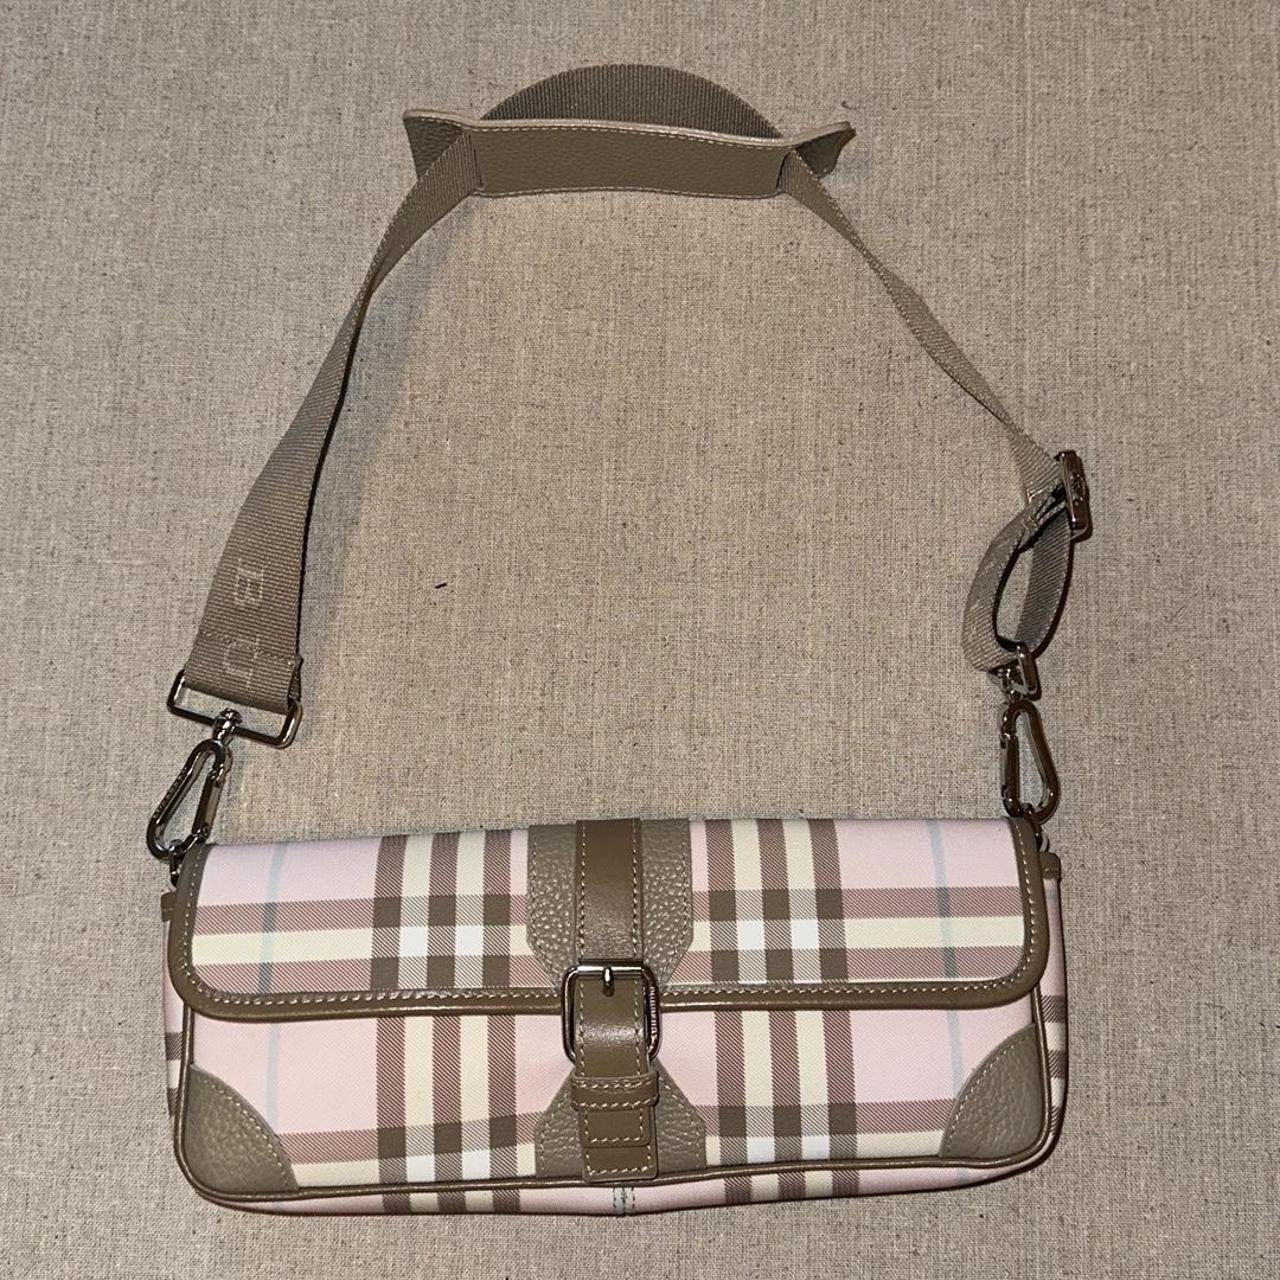 Authentic Burberry Pink Nova Check Convertible Clutch Bag